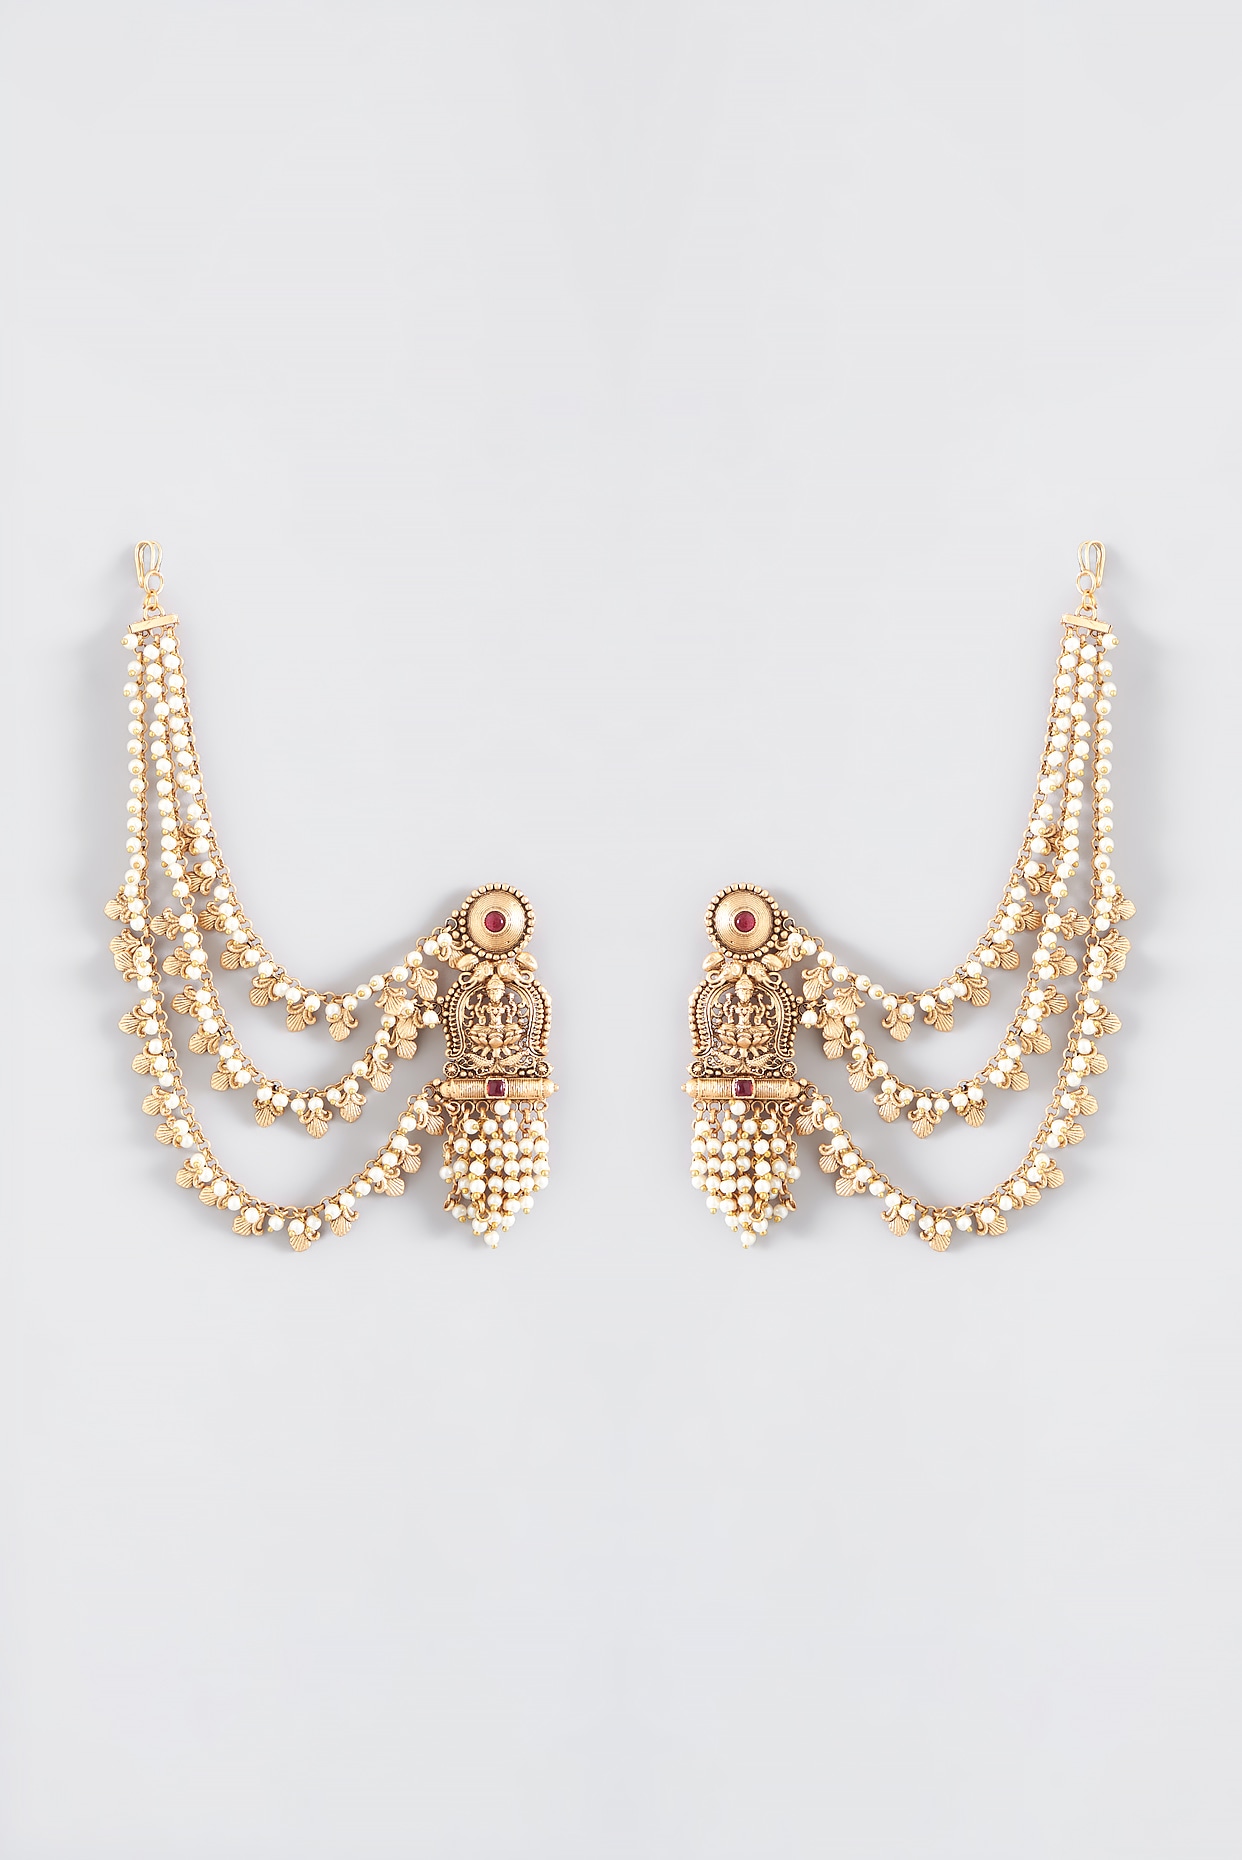 Buy Bahubali Earrings/ Indian Jewelry/ Bollywood Jewelry/ Jhumkas/ Indian  Earrings/ Gold Earrings/ Devsena Earrings/ Sahare/ Dangling Online in India  - Etsy